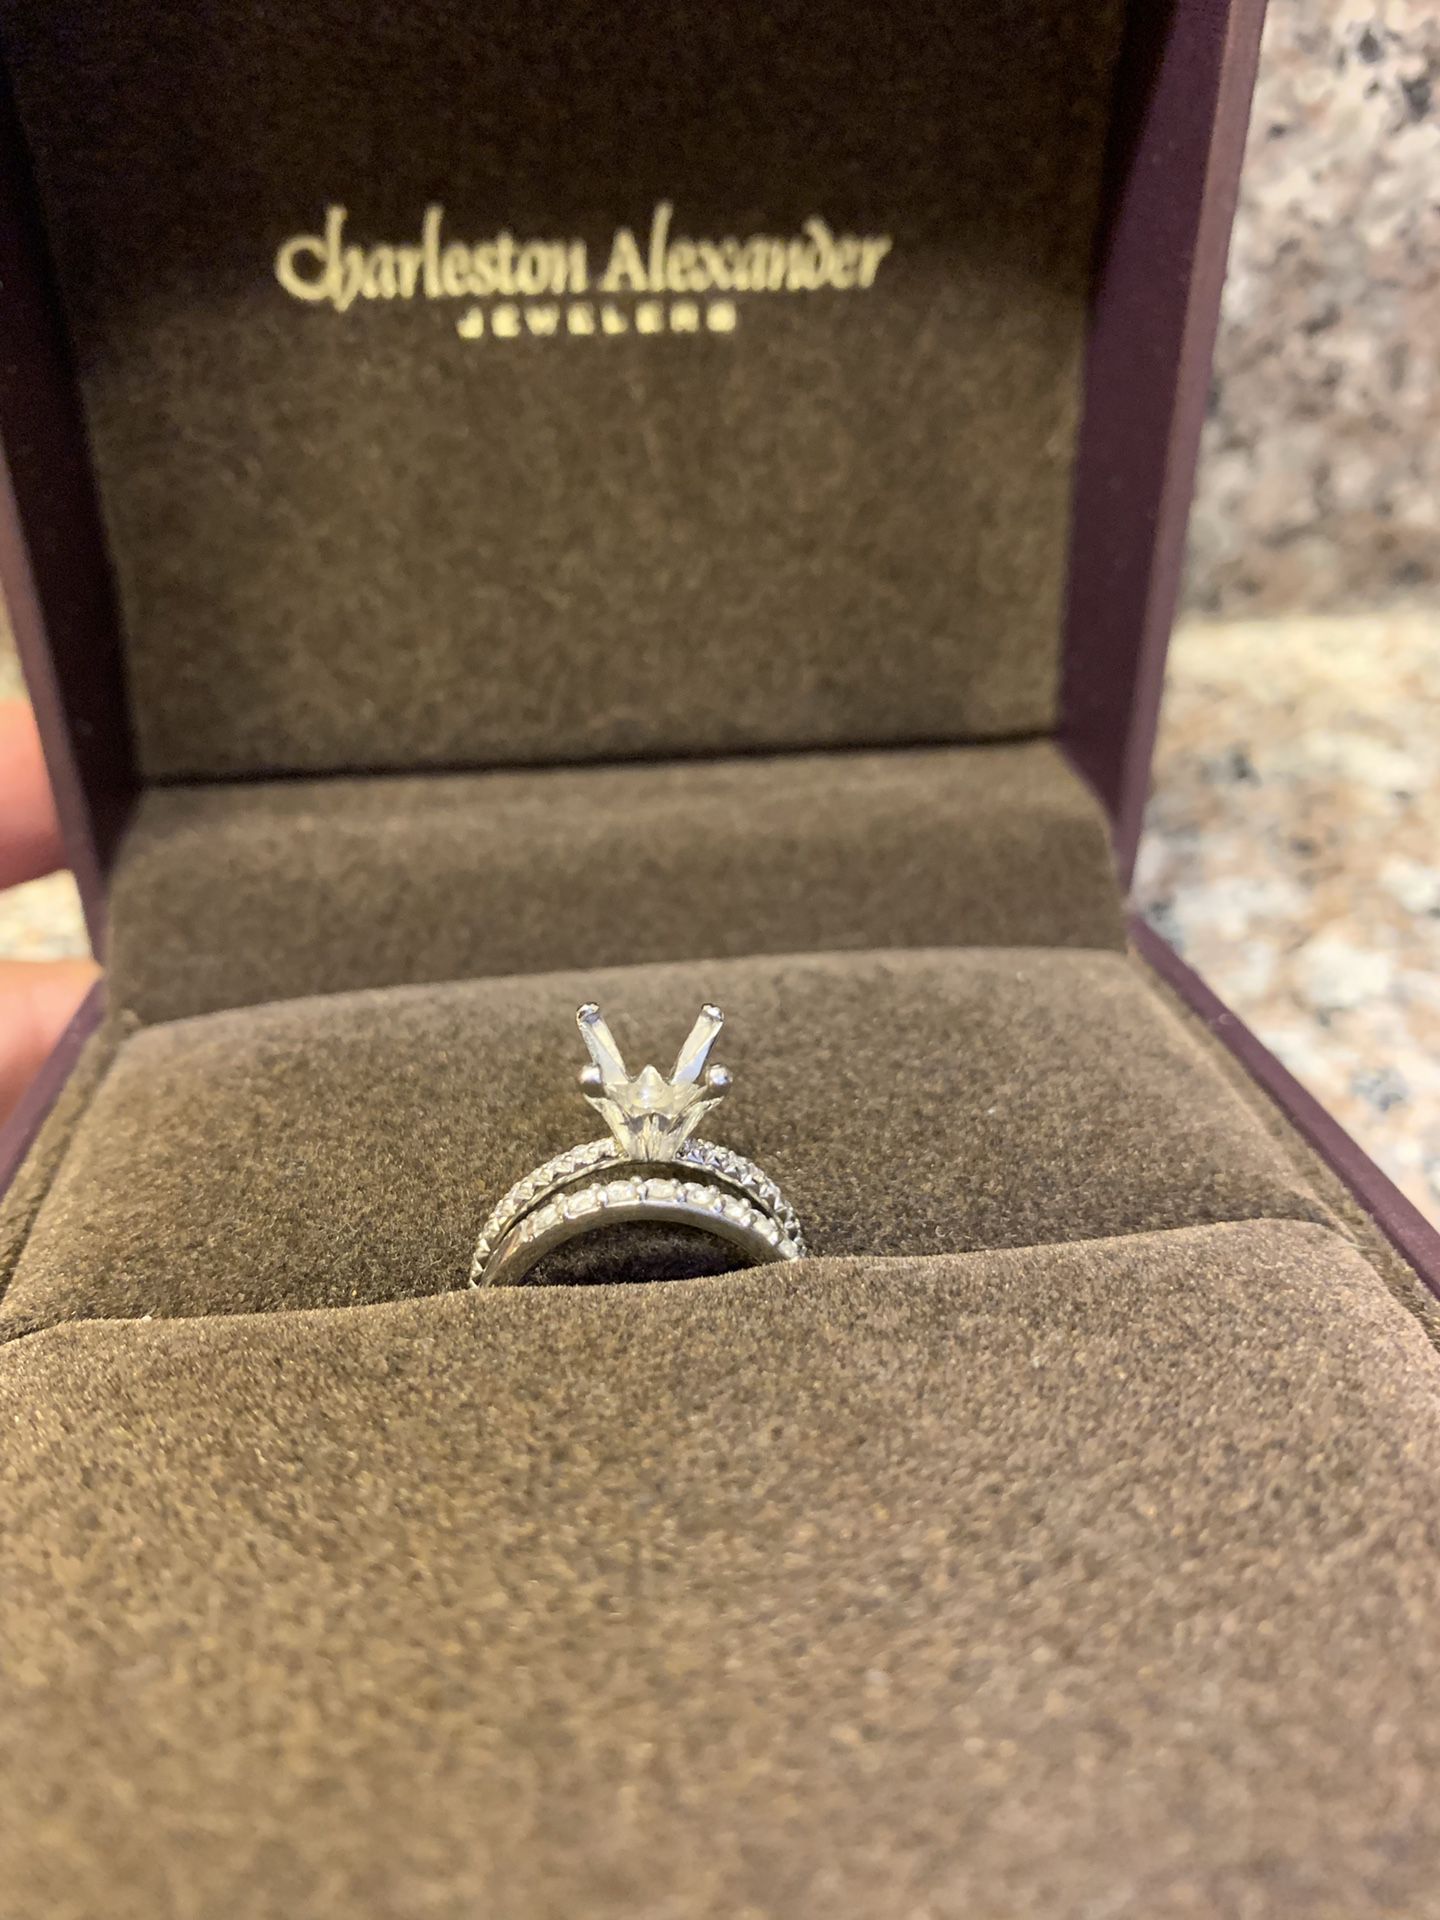 Beautiful Michael B platinum setting with 30 brilliant diamonds engagement ring and wedding band